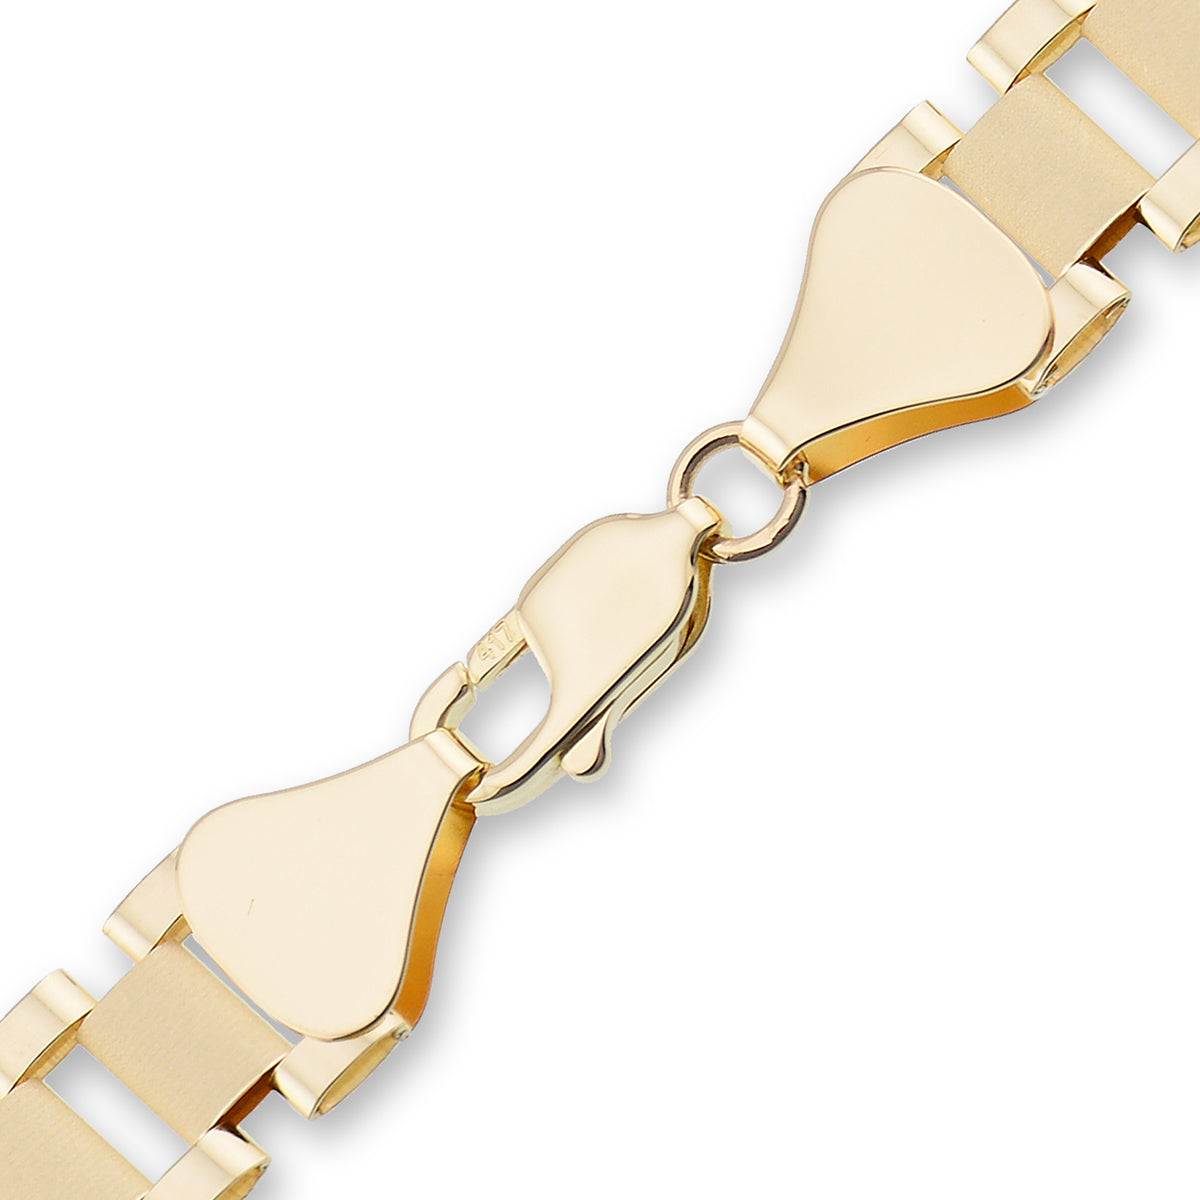 10K Solid Real Gold 10 MM Presidential Watch Band Style Hip Hop Bracelet or Anklet